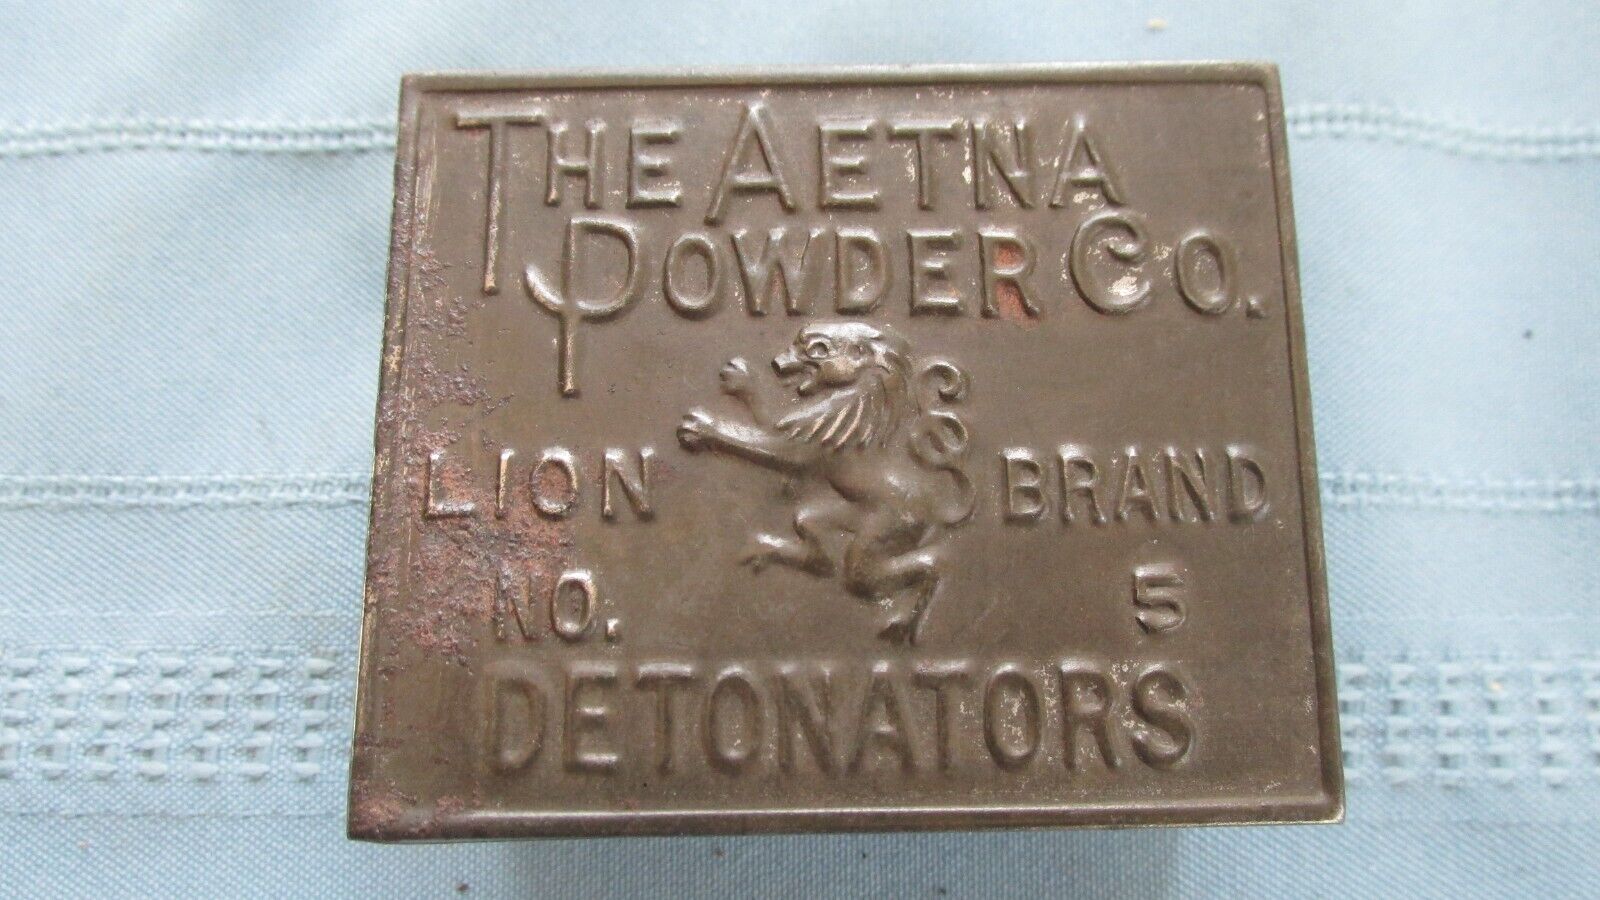 Antique Valuations: Embossed Aetna Powder Company No. 5 Lion Brand Detonators-Blasting Caps Tin